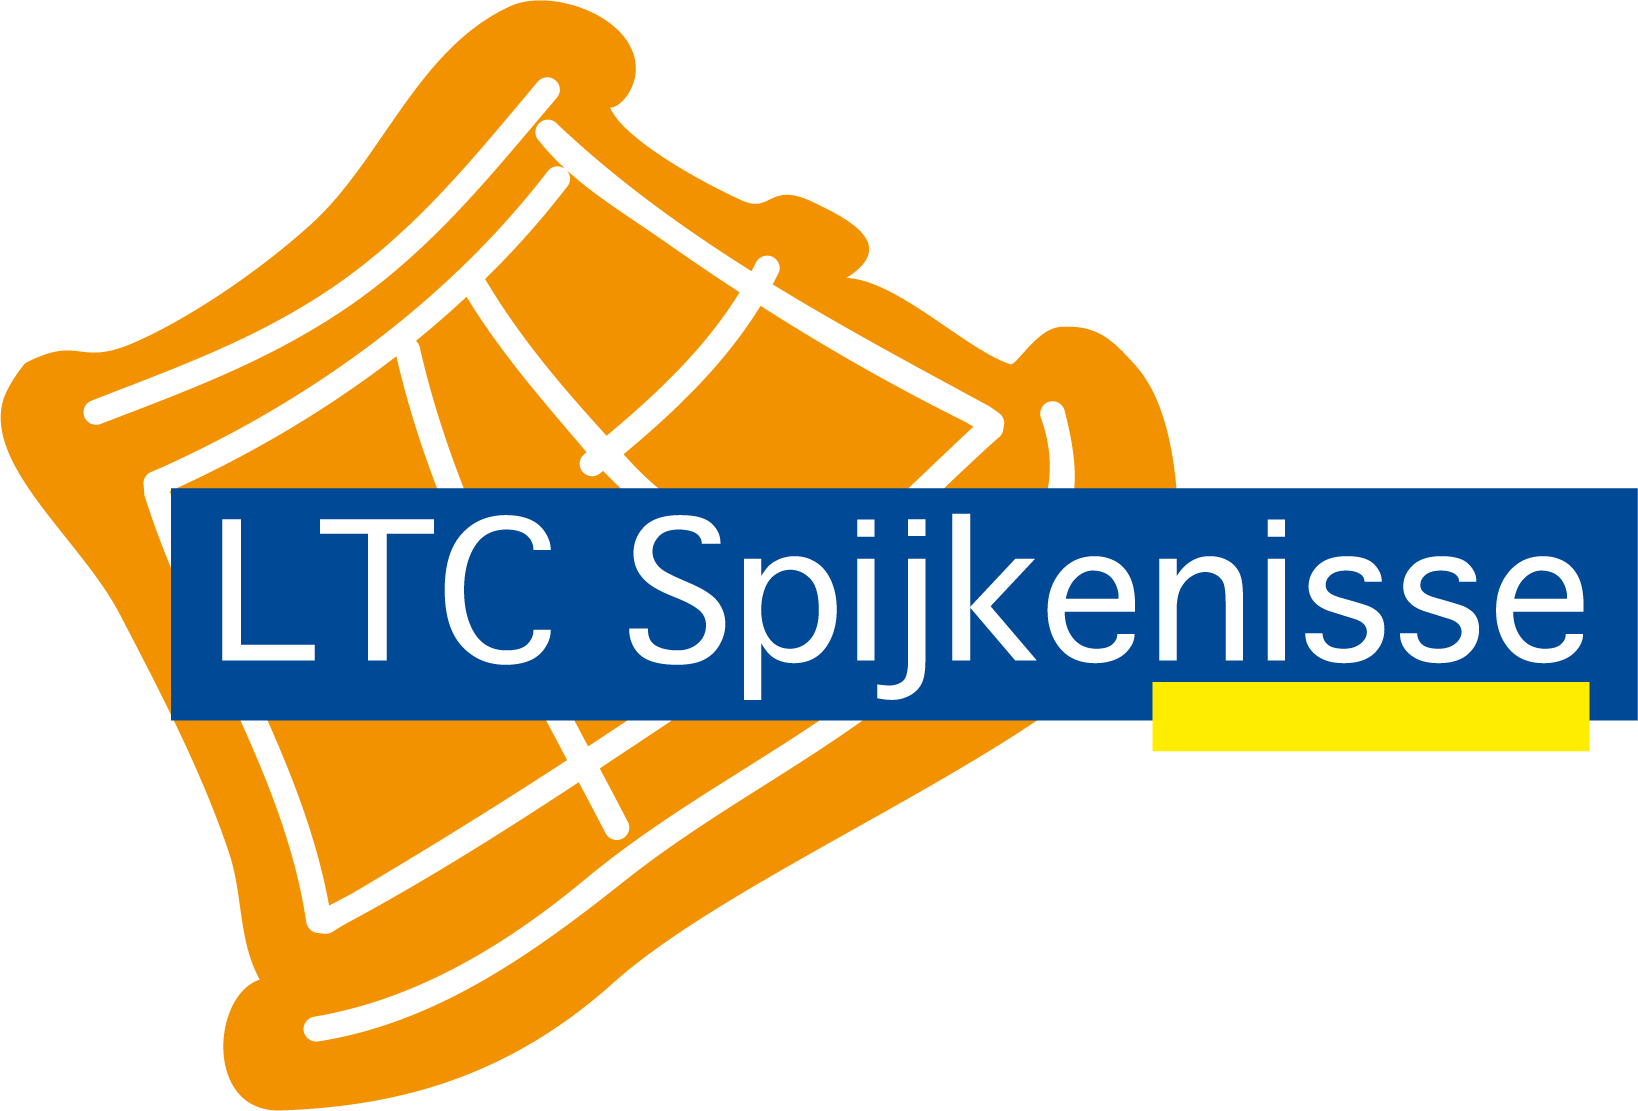 Profile image of venue LTC Spijkenisse